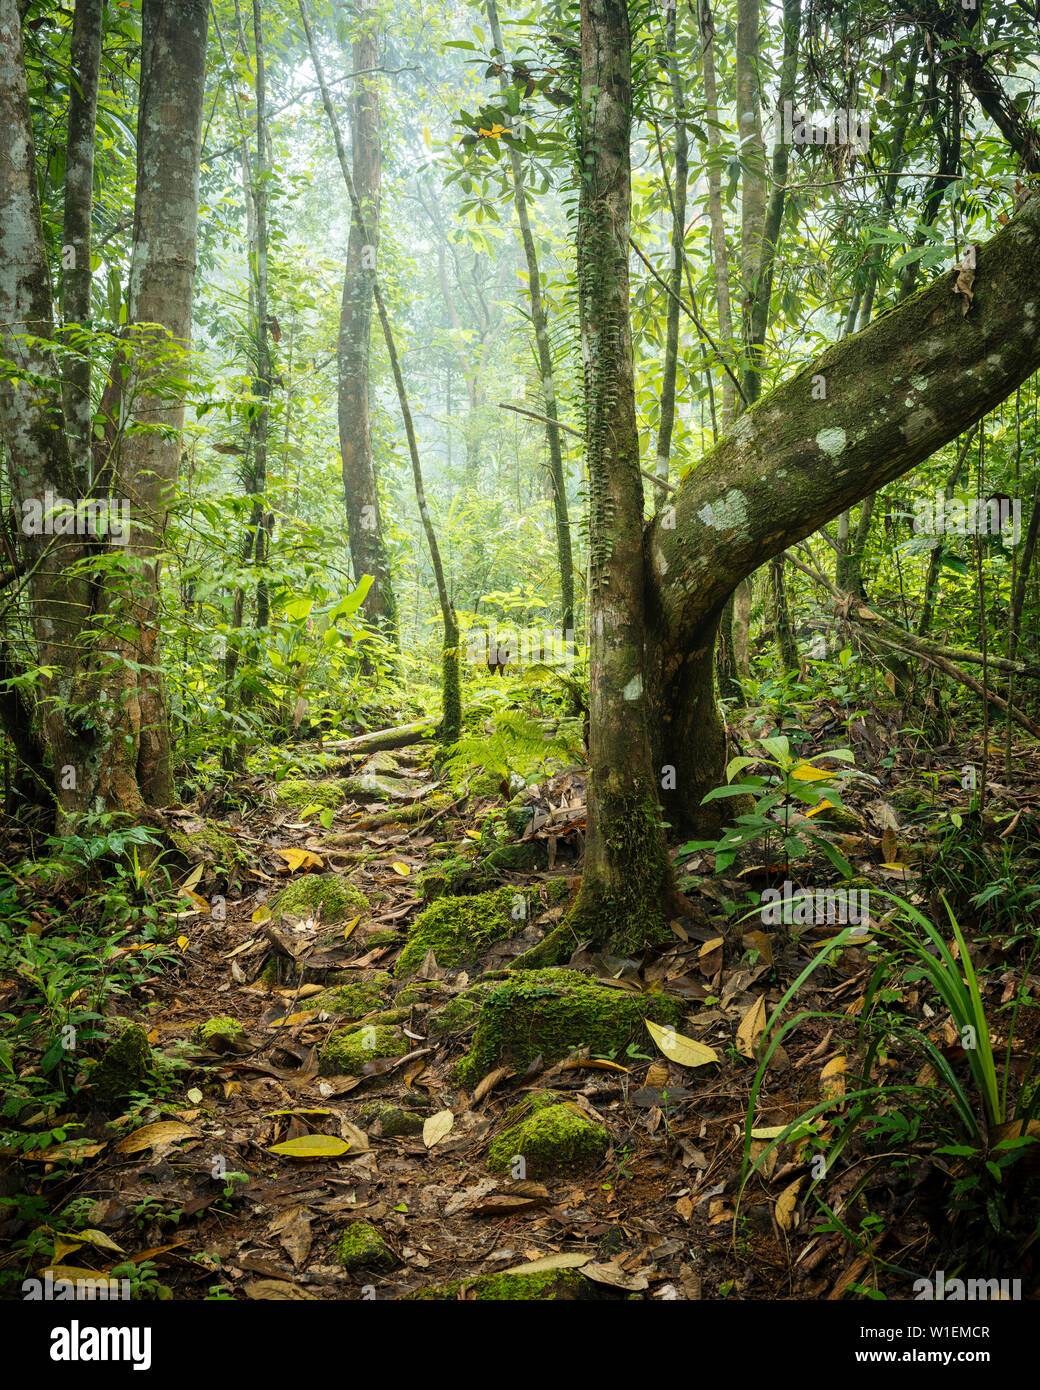 Le Parc National de la forêt de Sinharaja, Deniyaya, Province du Sud, Sri Lanka, Asie Banque D'Images